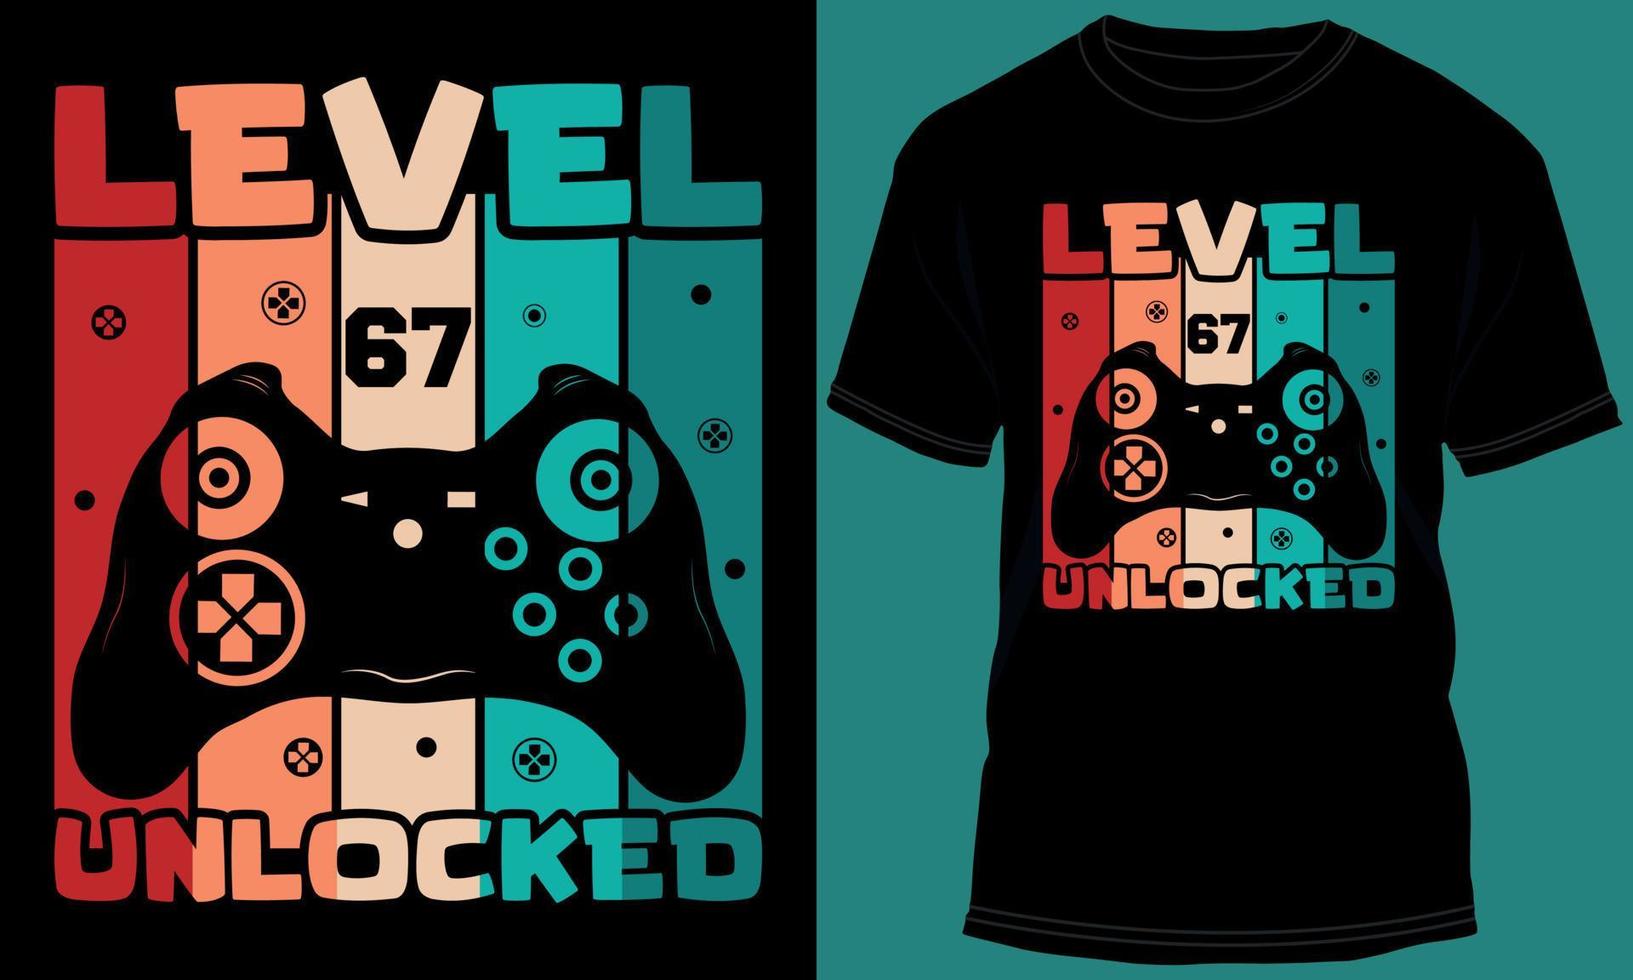 Gamer or Gaming Level 67 Unlocked Tshirt Design vector